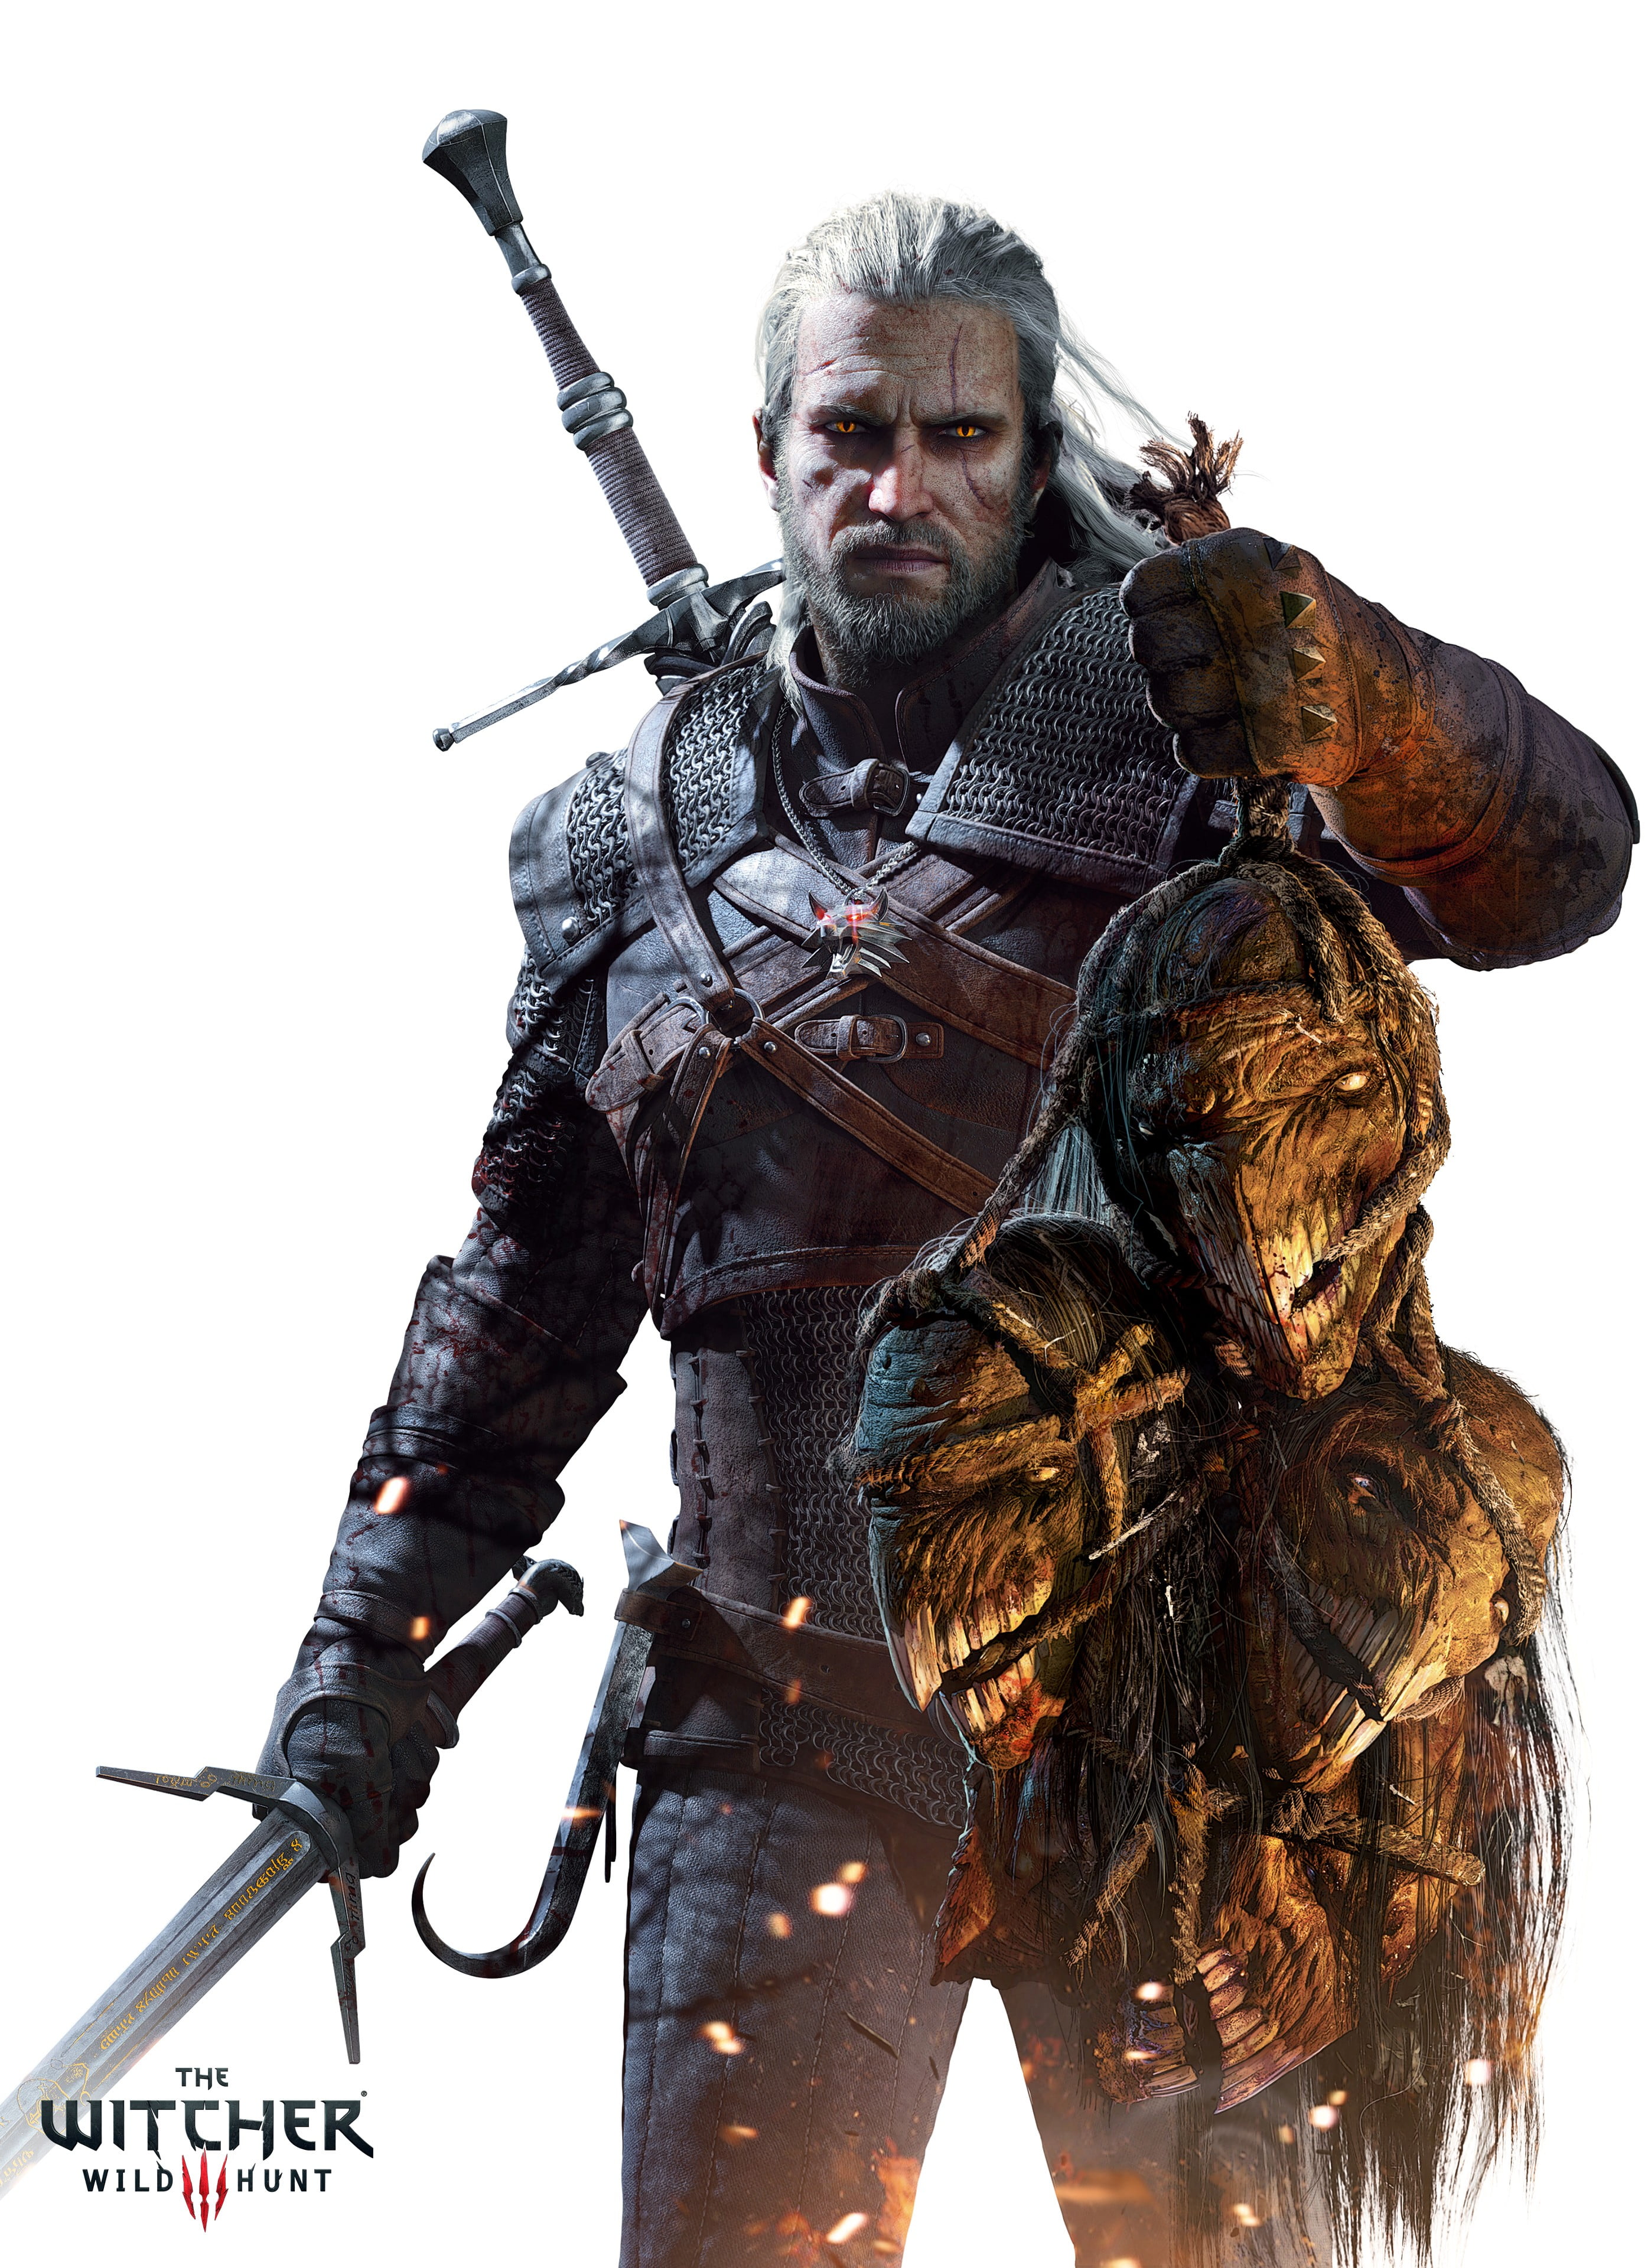 The Witcher Wild Hunt 3 wallpaper, The Witcher 3: Wild Hunt, Geralt of Rivia